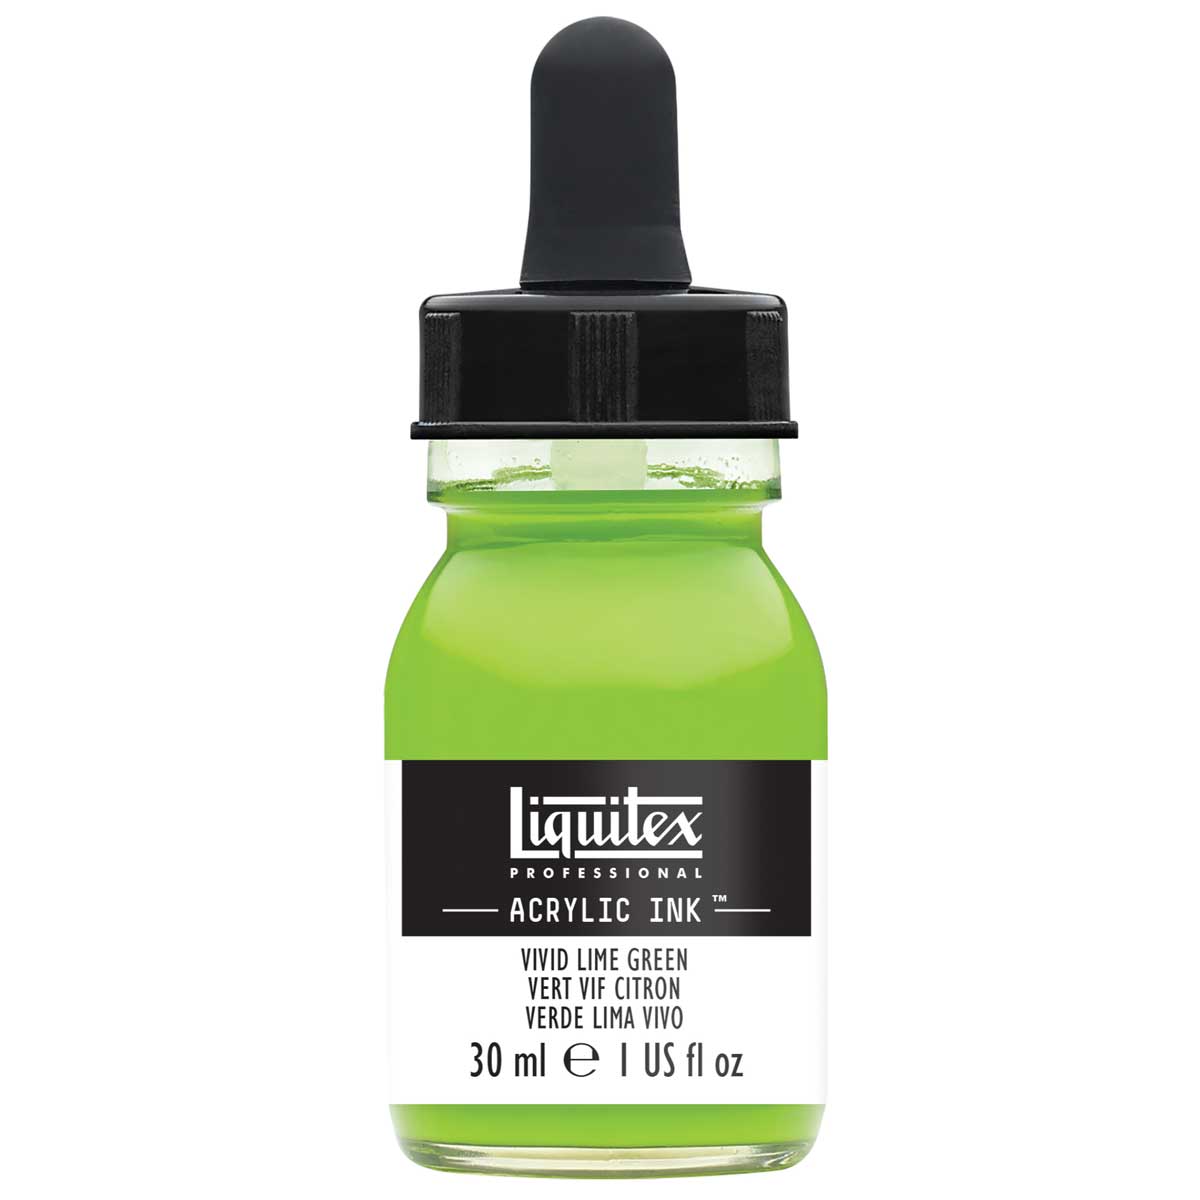 Liquitex Professional Acrylic Ink - Vivid Lime Green 30ml/1oz